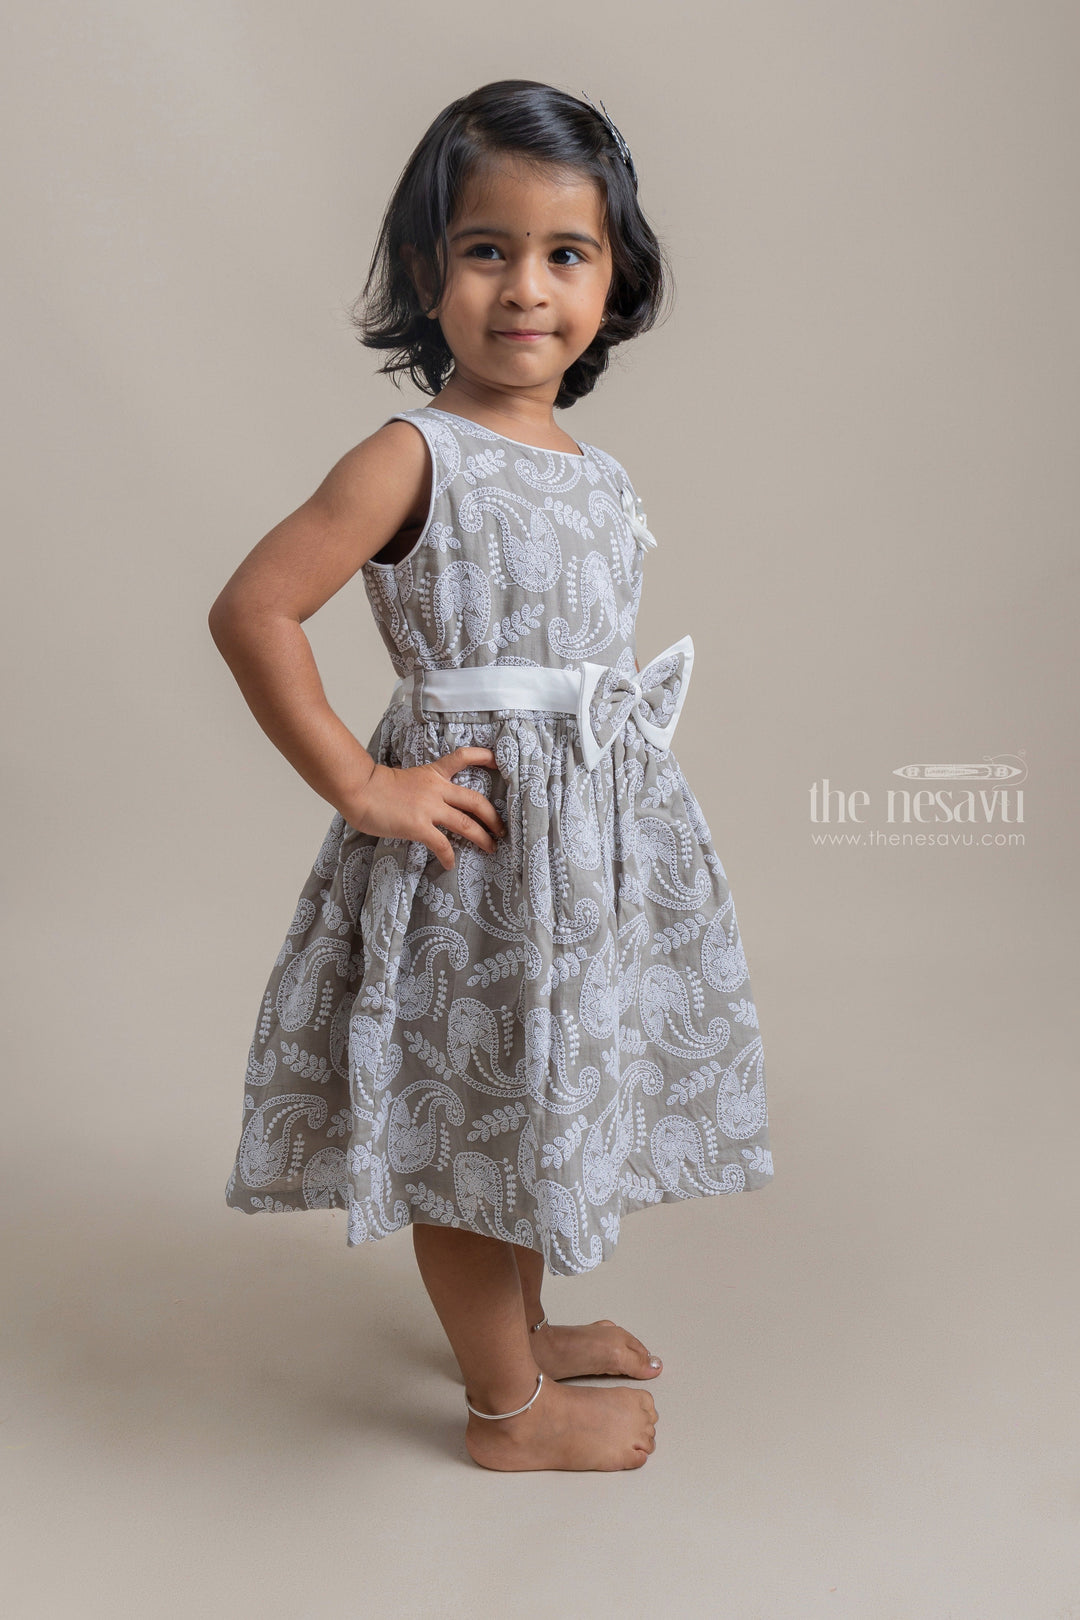 The Nesavu Frocks & Dresses Pretty Paiseley Embroidered Sleeveless Gray Cotton Frock For Little Girls psr silks Nesavu